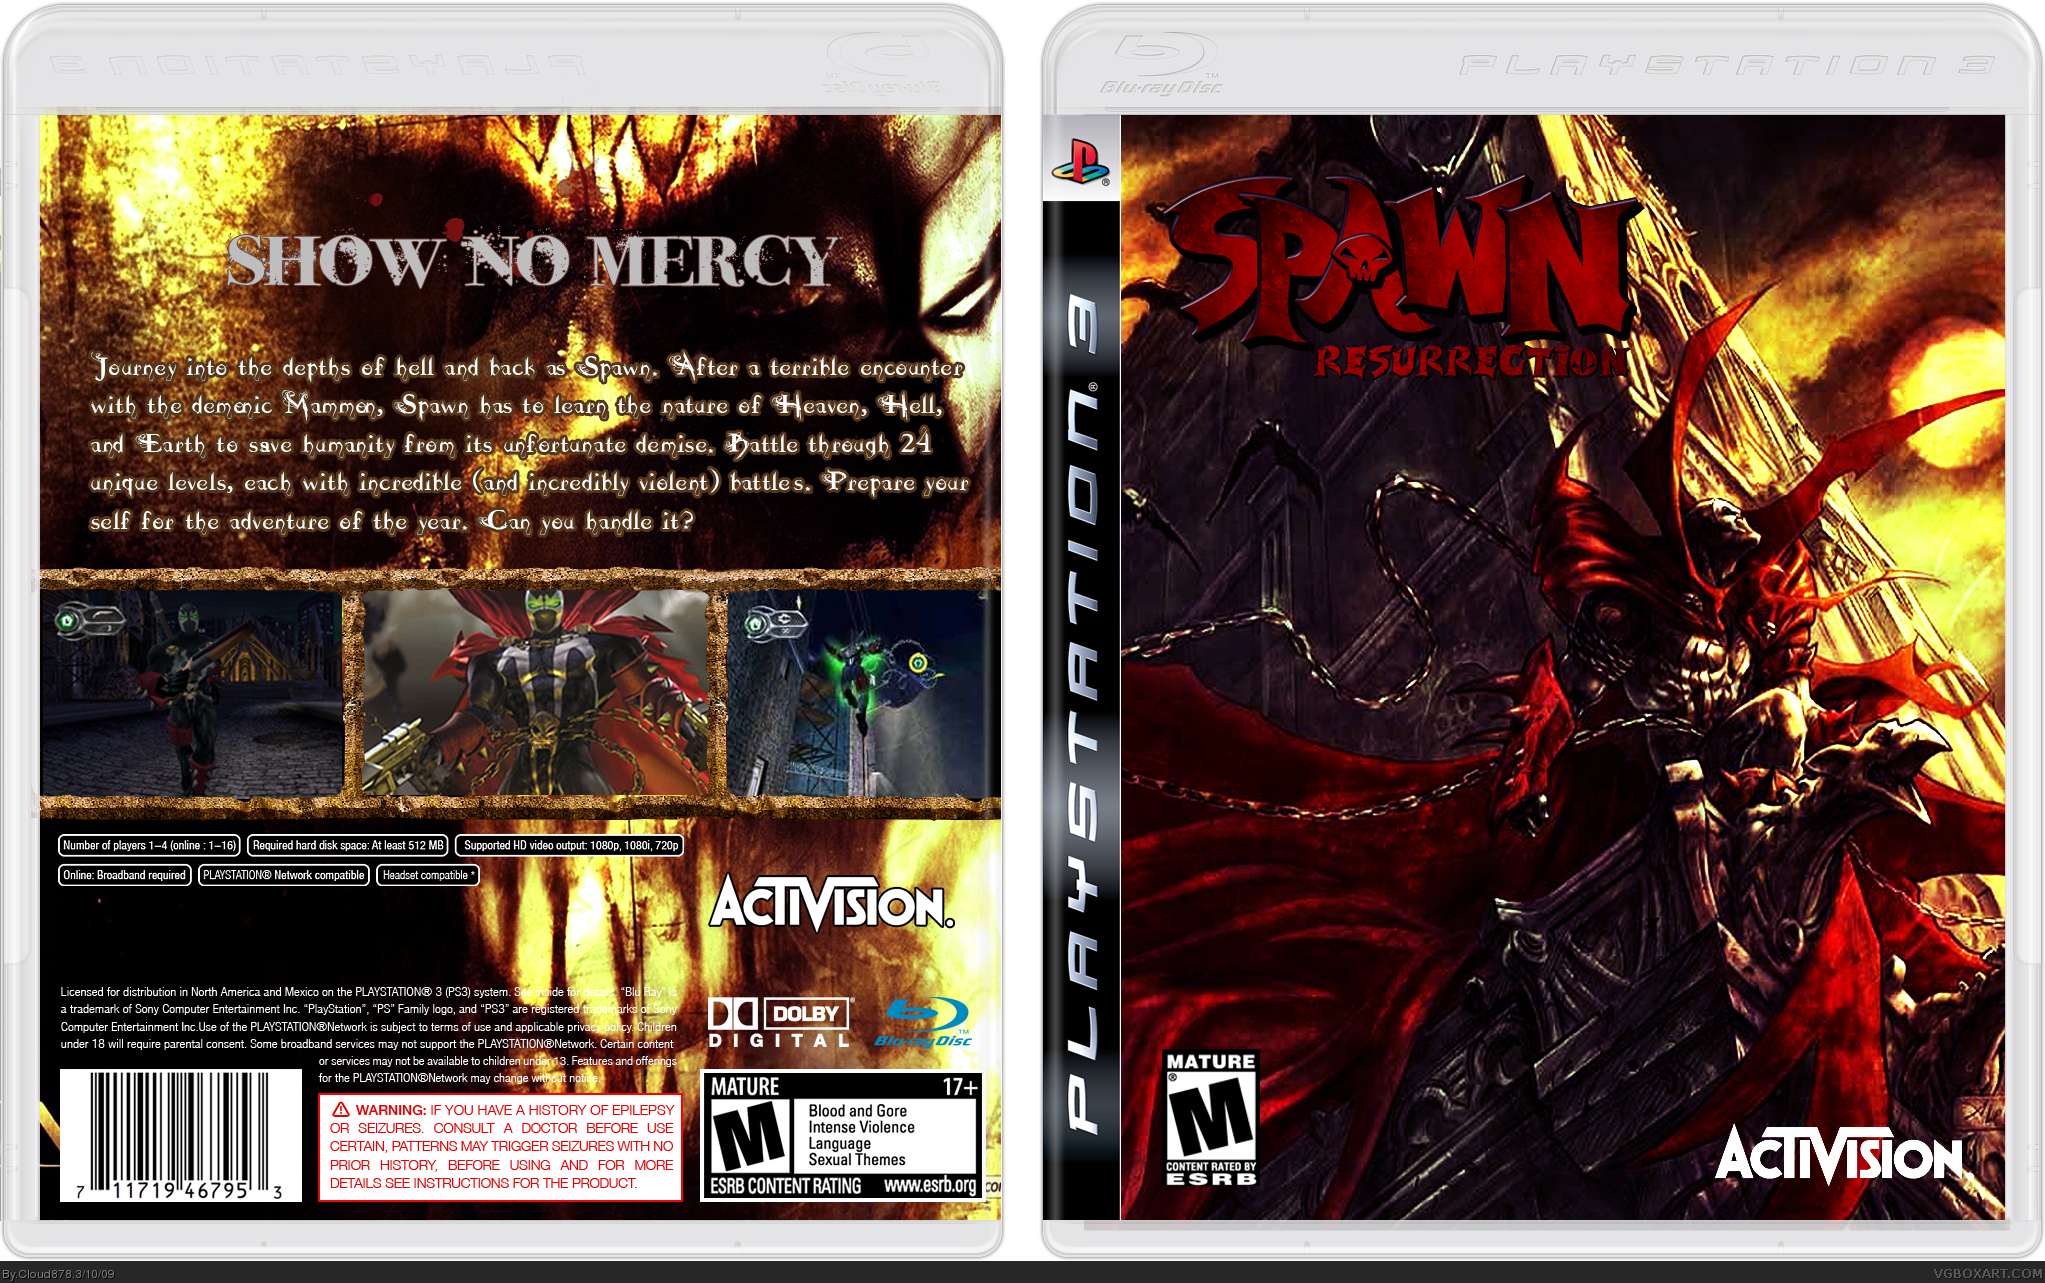 Spawn: Resurrection box cover